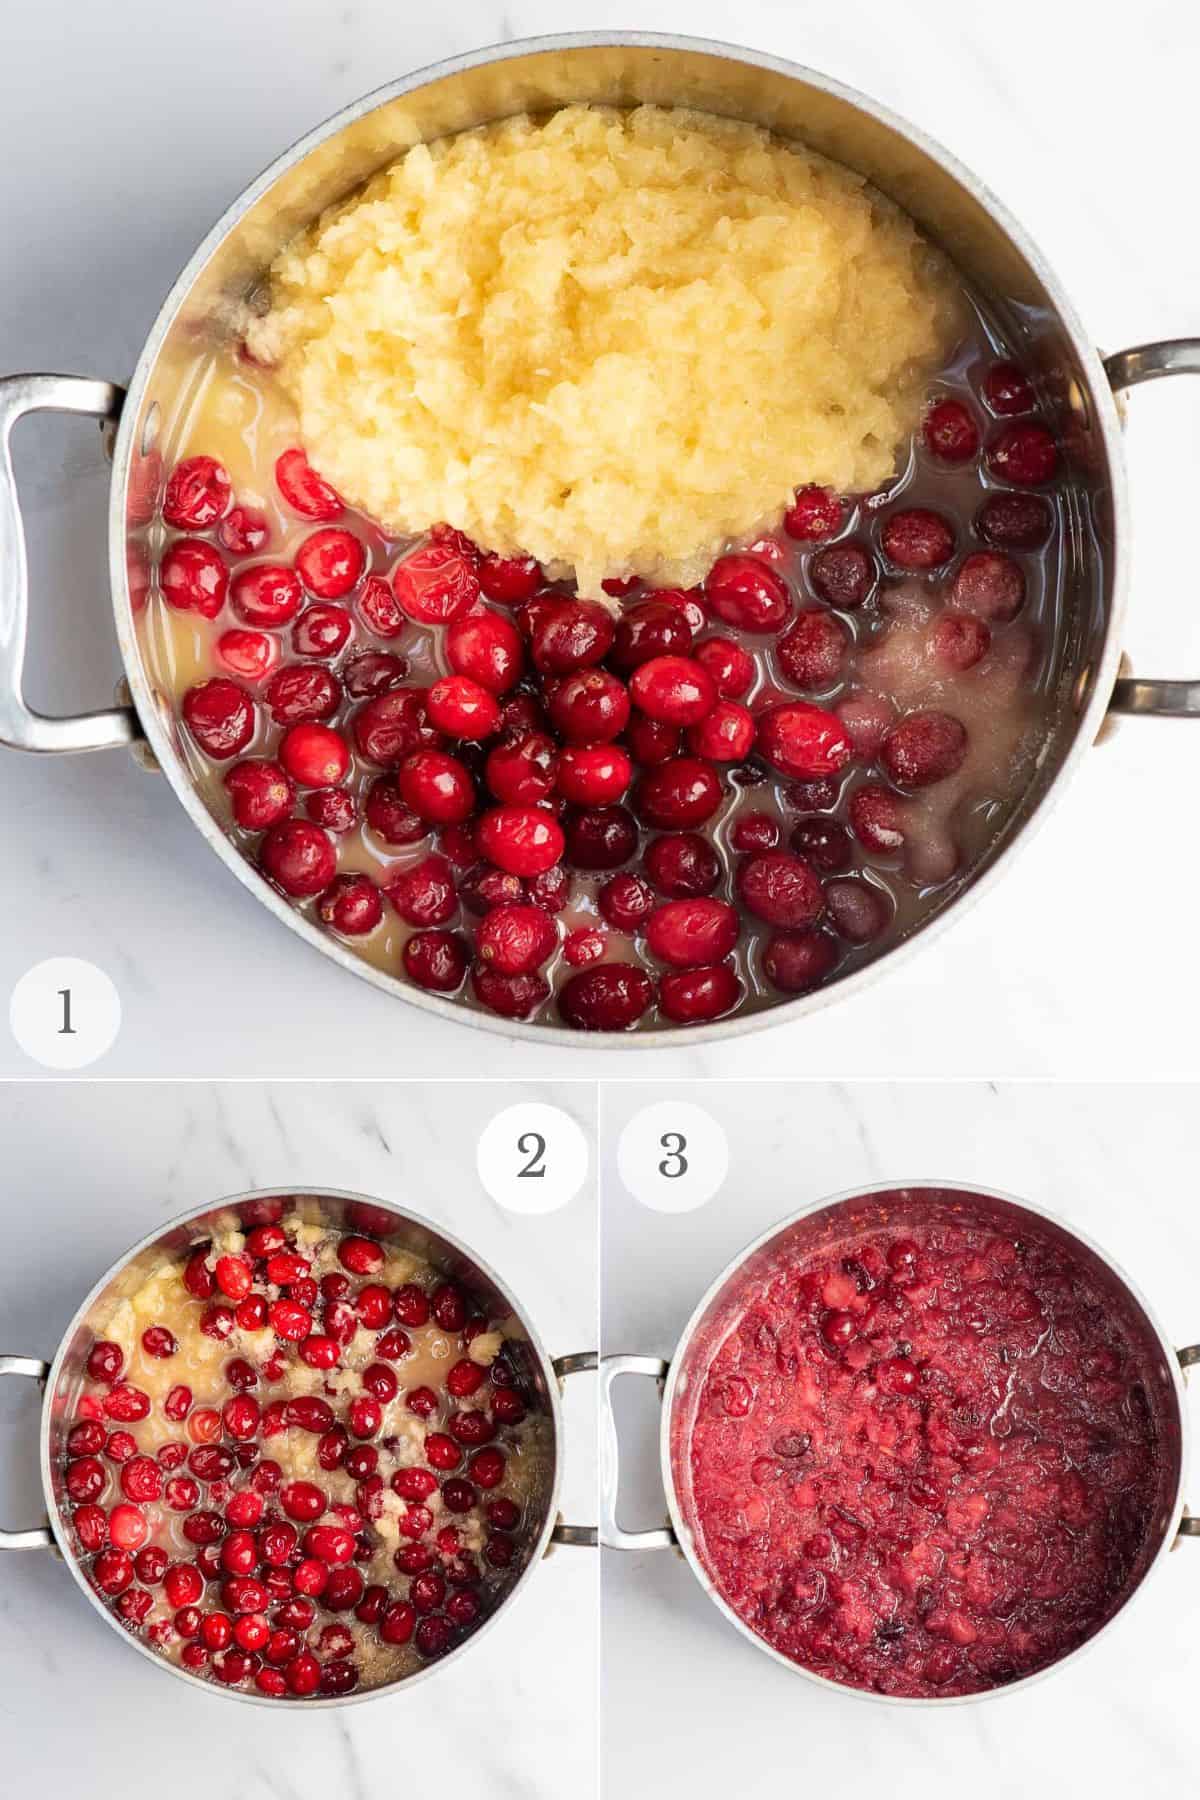 cranberry pineapple sauce recipe steps 1-3.